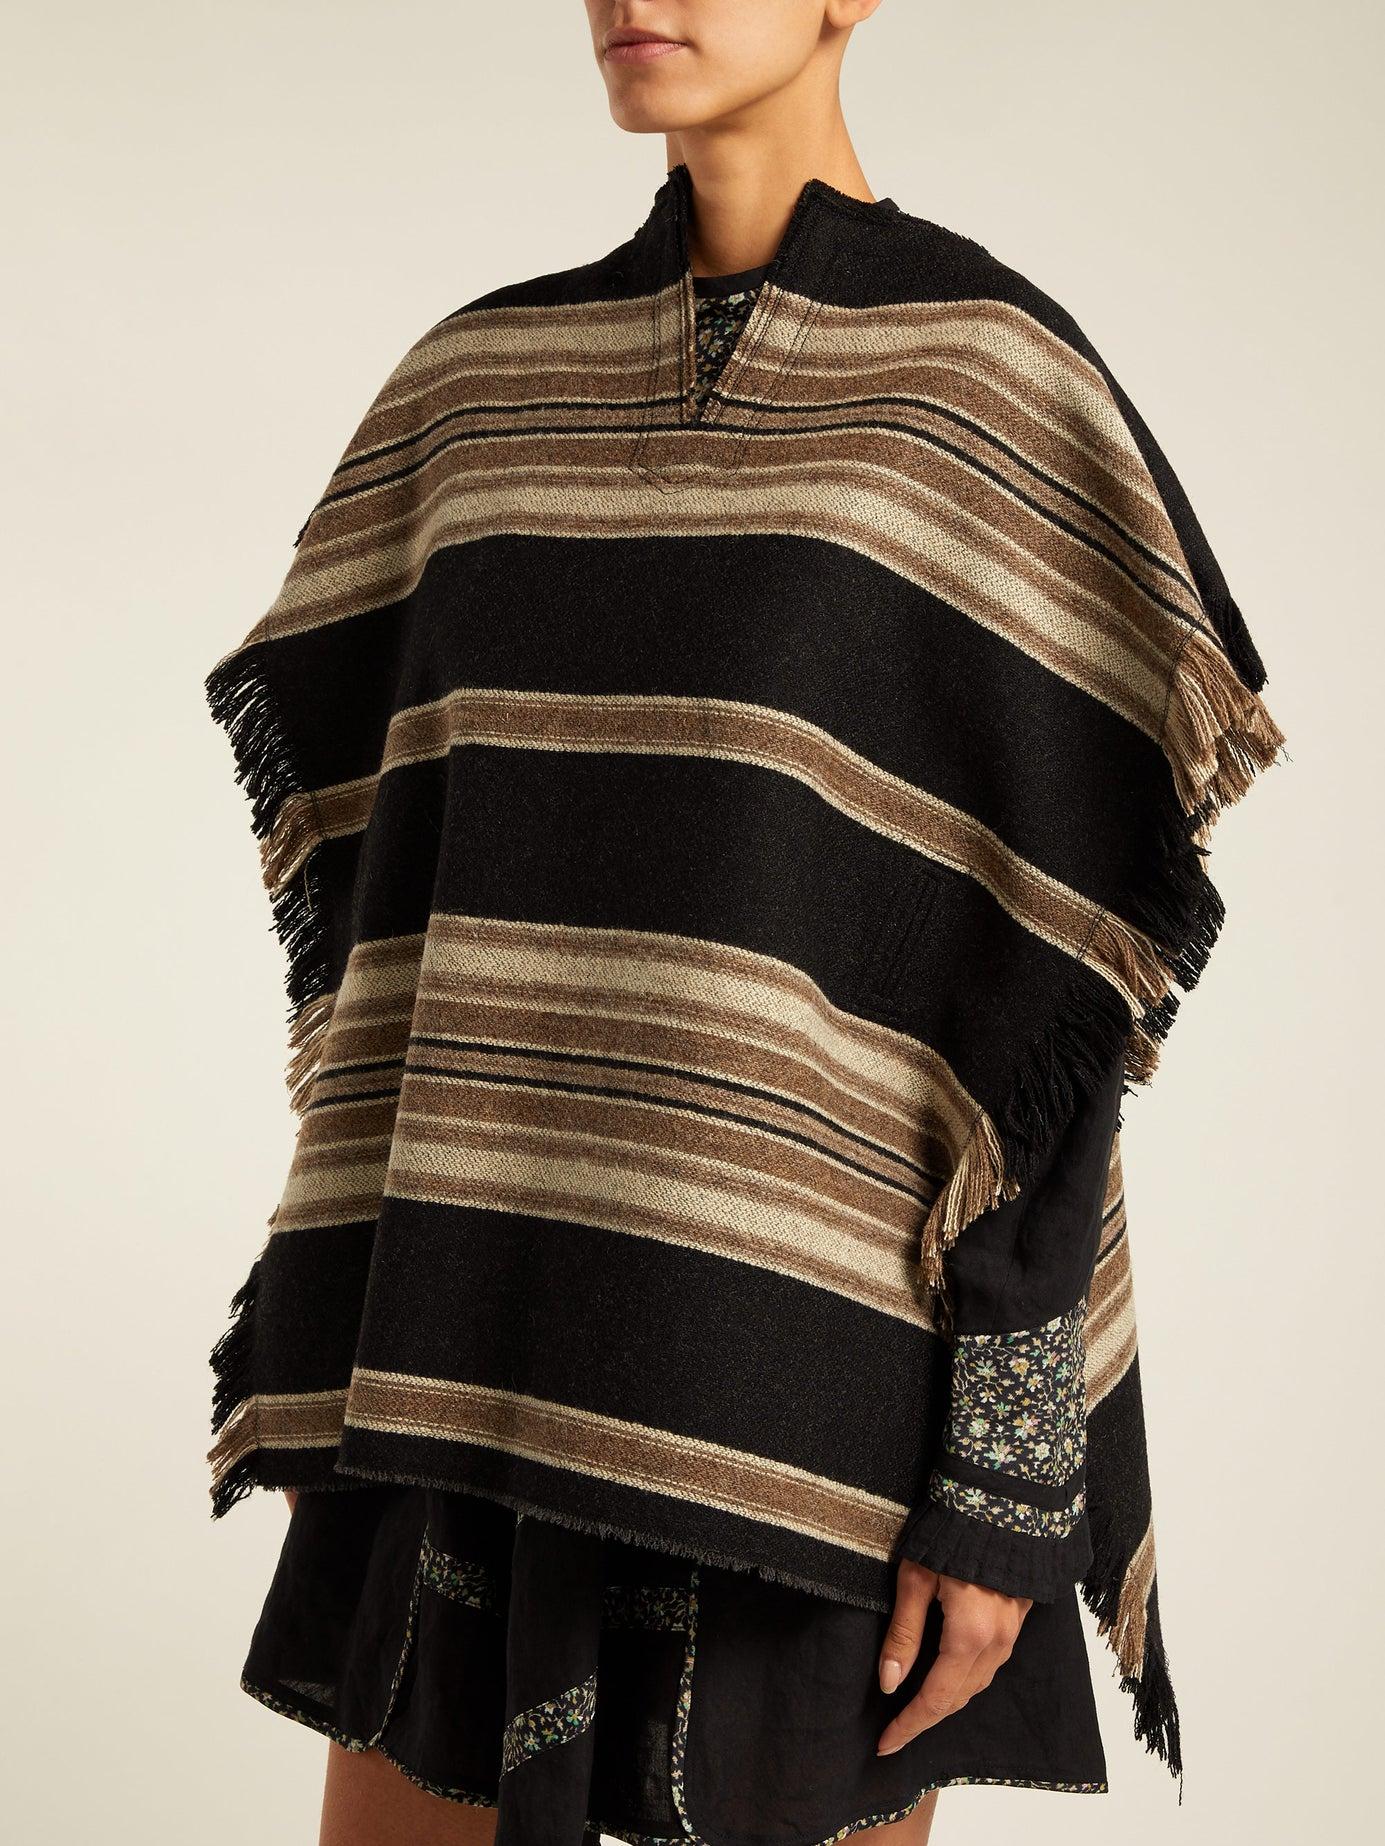 Isabel Marant Hollis Wool-blend Poncho in Black - Lyst